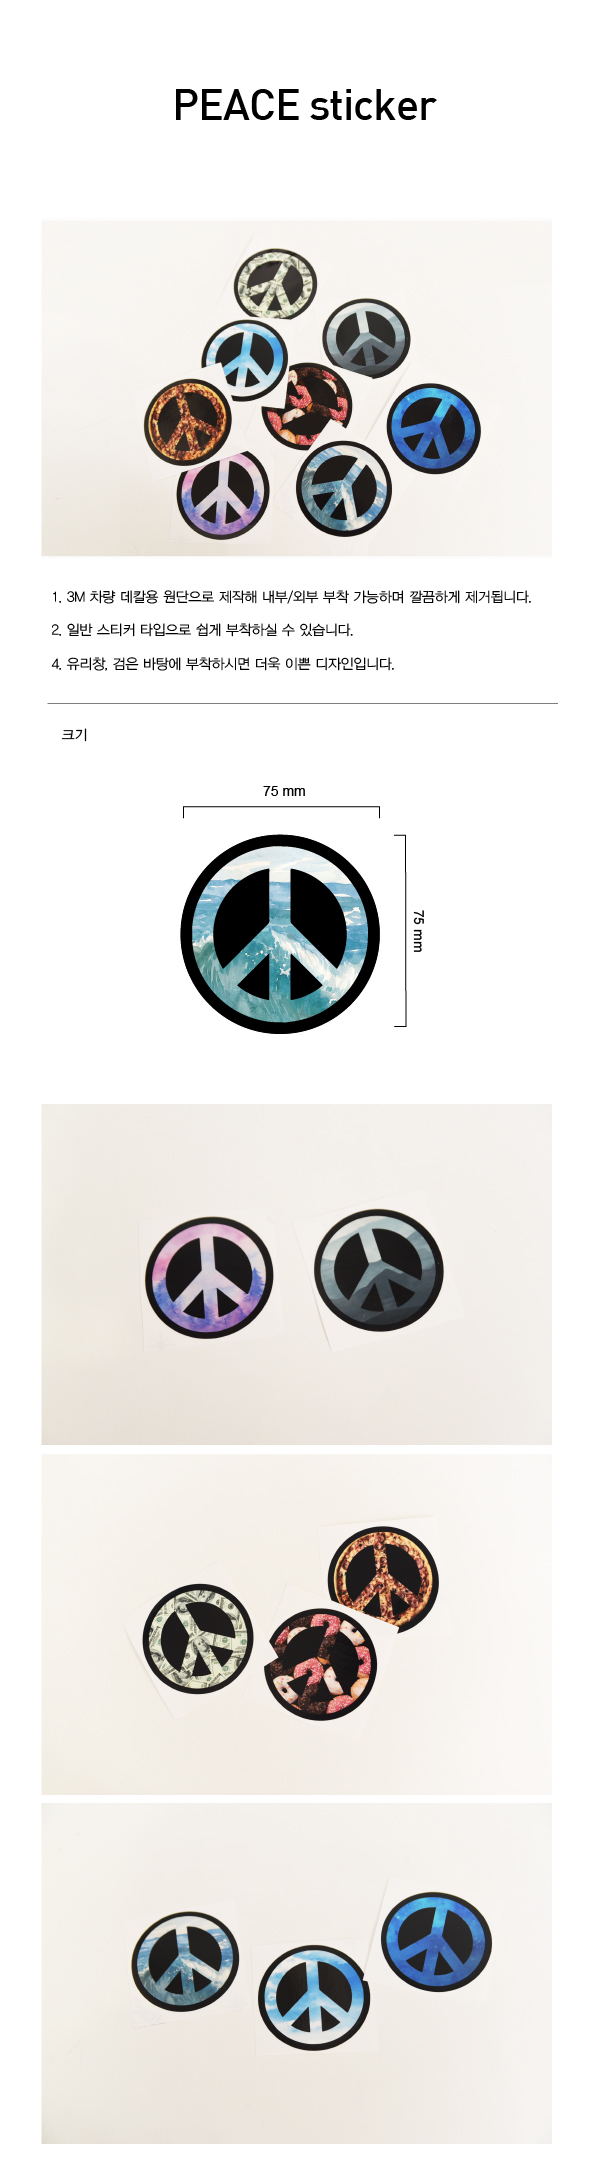 peace-sticker_01_214930_155104.jpg